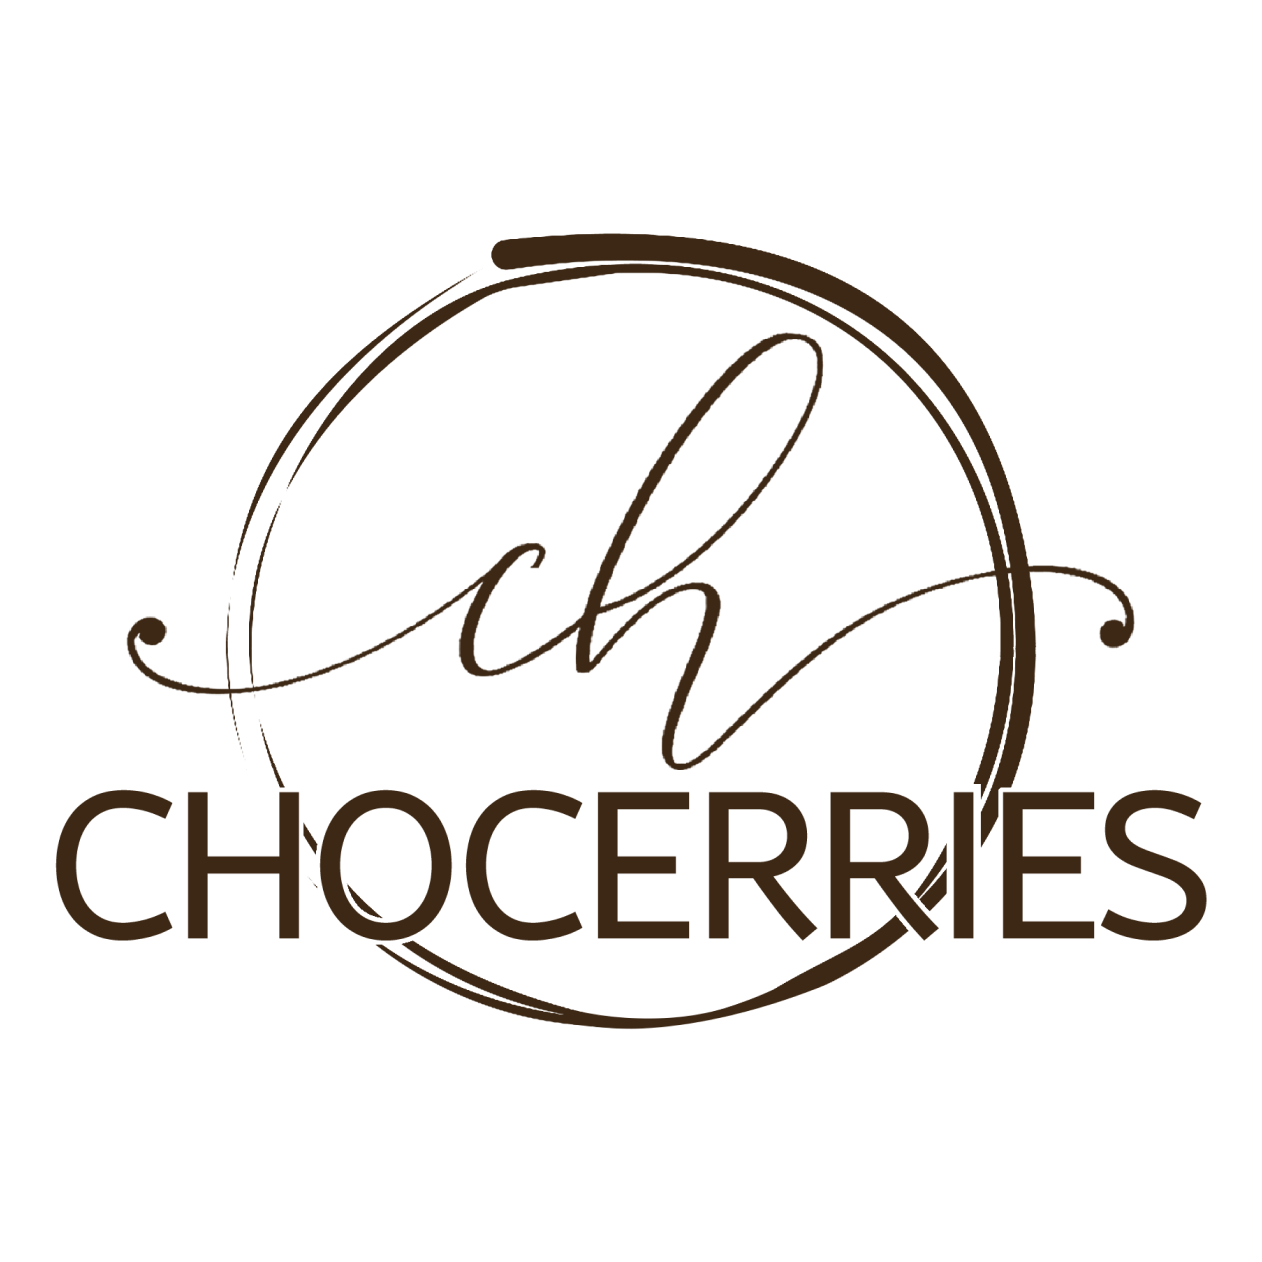 Chocerries